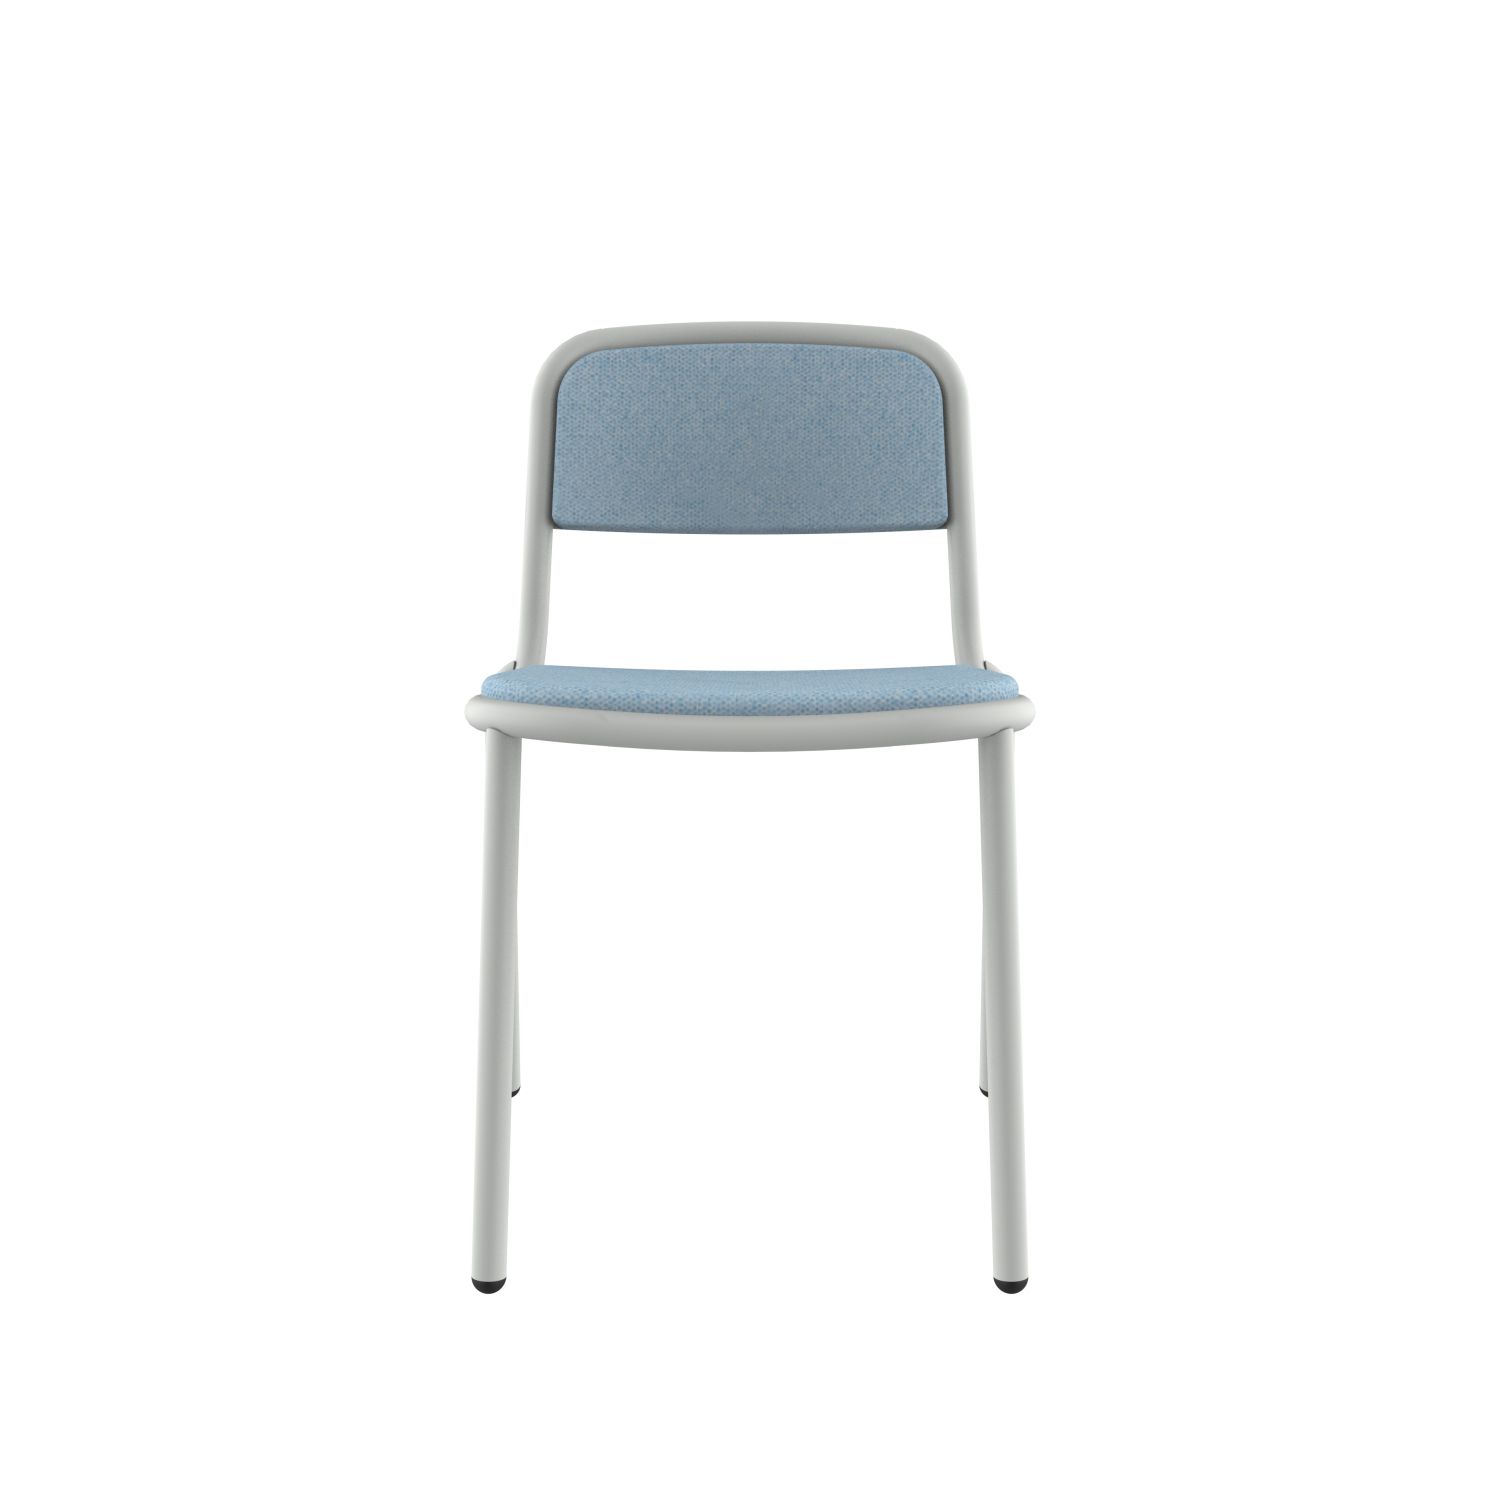 lensvelt stefan scholten loop chair upholsterd stackable without armrest moss pastel blue 40 price level 1 light grey ral7035 hard leg ends